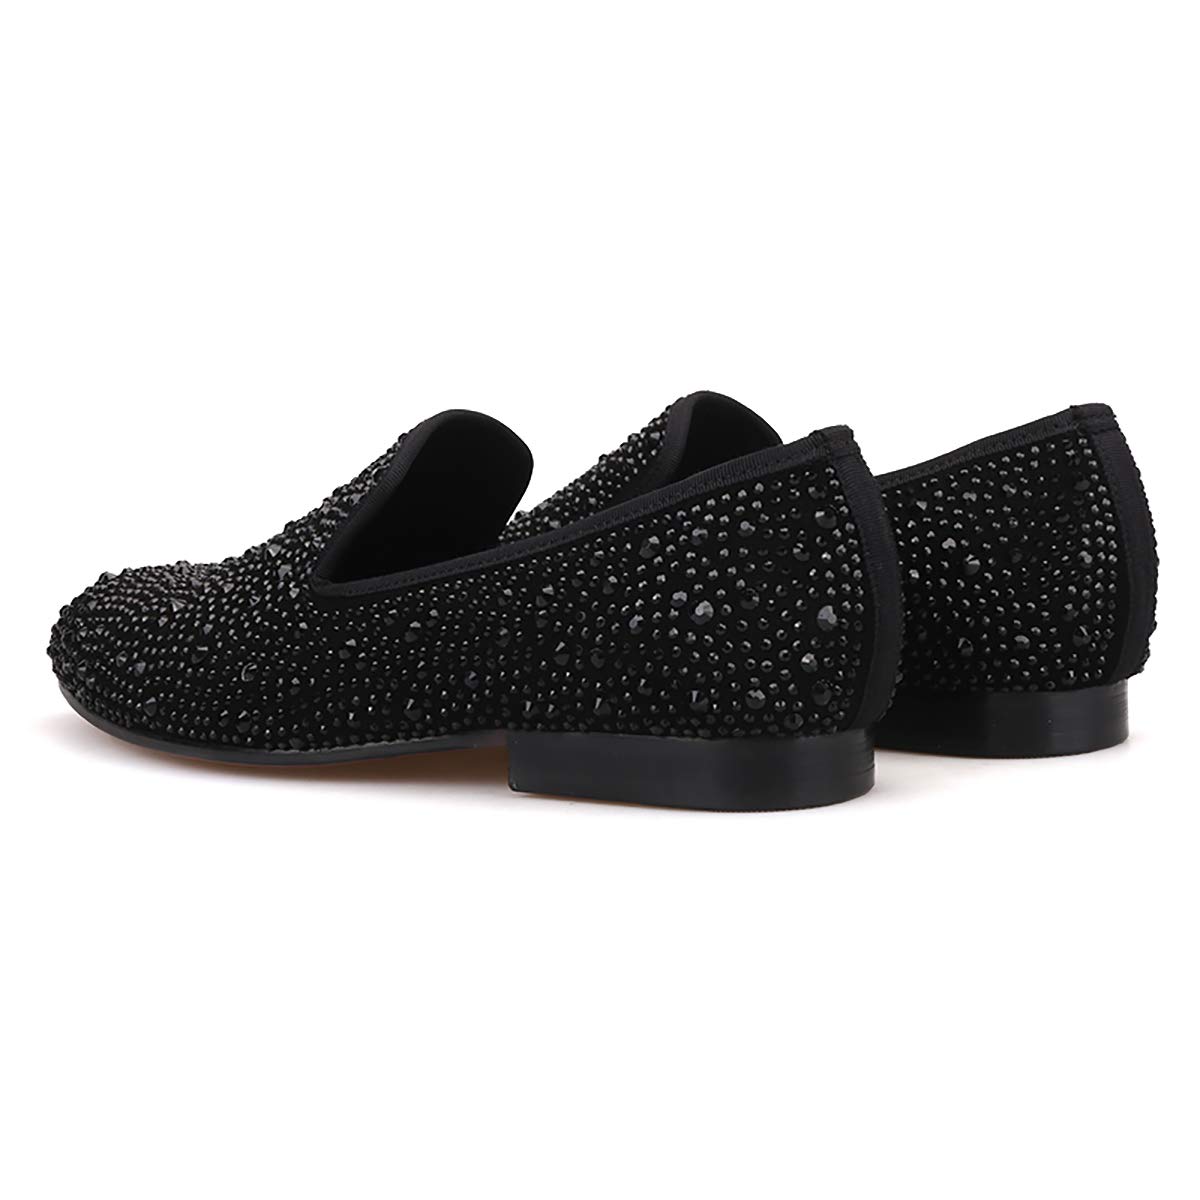 HI&HANN Men's Crystal Suede Genuine Leather Loafer Shoes Slip-on Loafer Round Toes Smoking Slipper